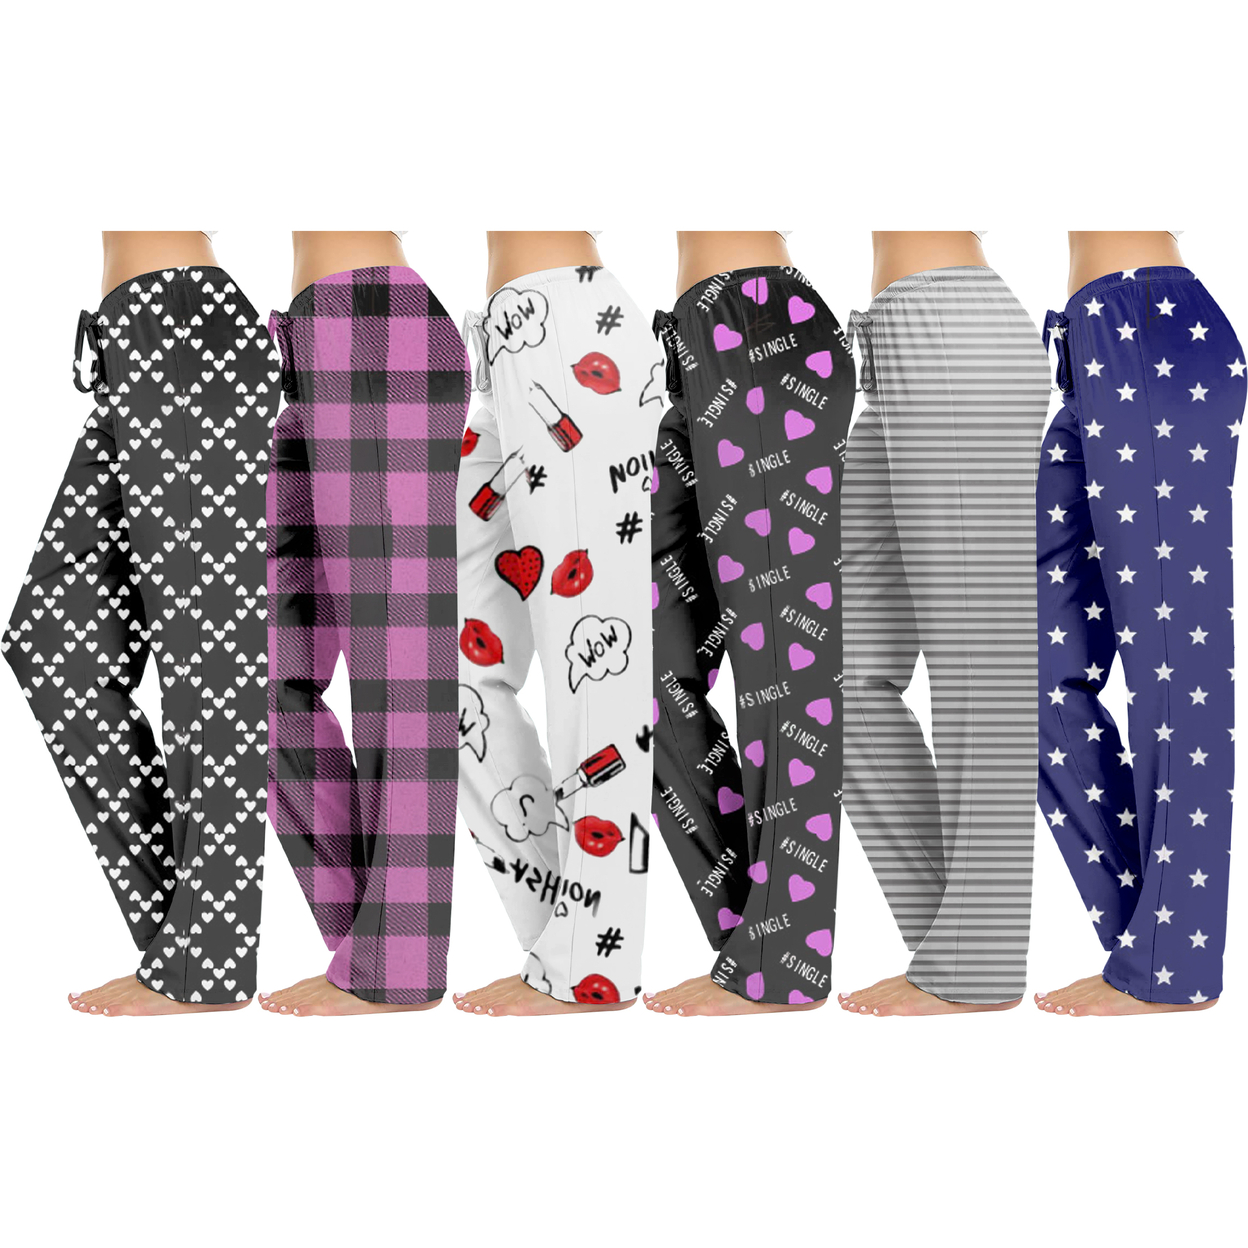 2-Pack: Women's Casual Fun Printed Lightweight Lounge Terry Knit Pajama Bottom Pants - X-large, Animal